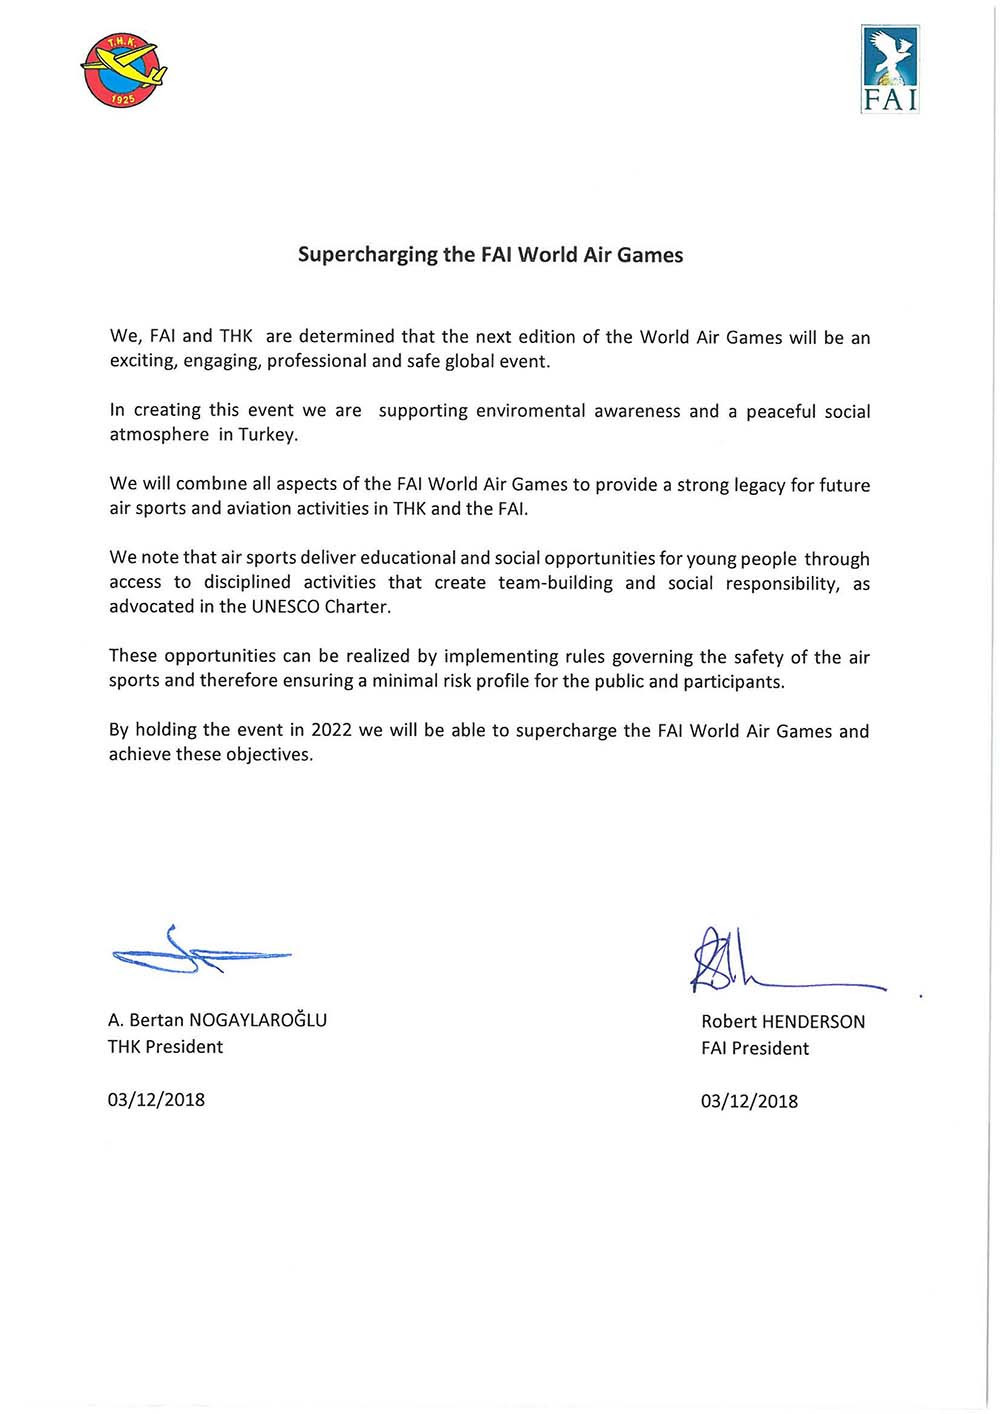 FAI President Robert Henderson and THK President A. Bertan Nogaylaroğlu signed a joint statement pushing back the FAI World Air Games in Turkey to September 2022 ©FAI